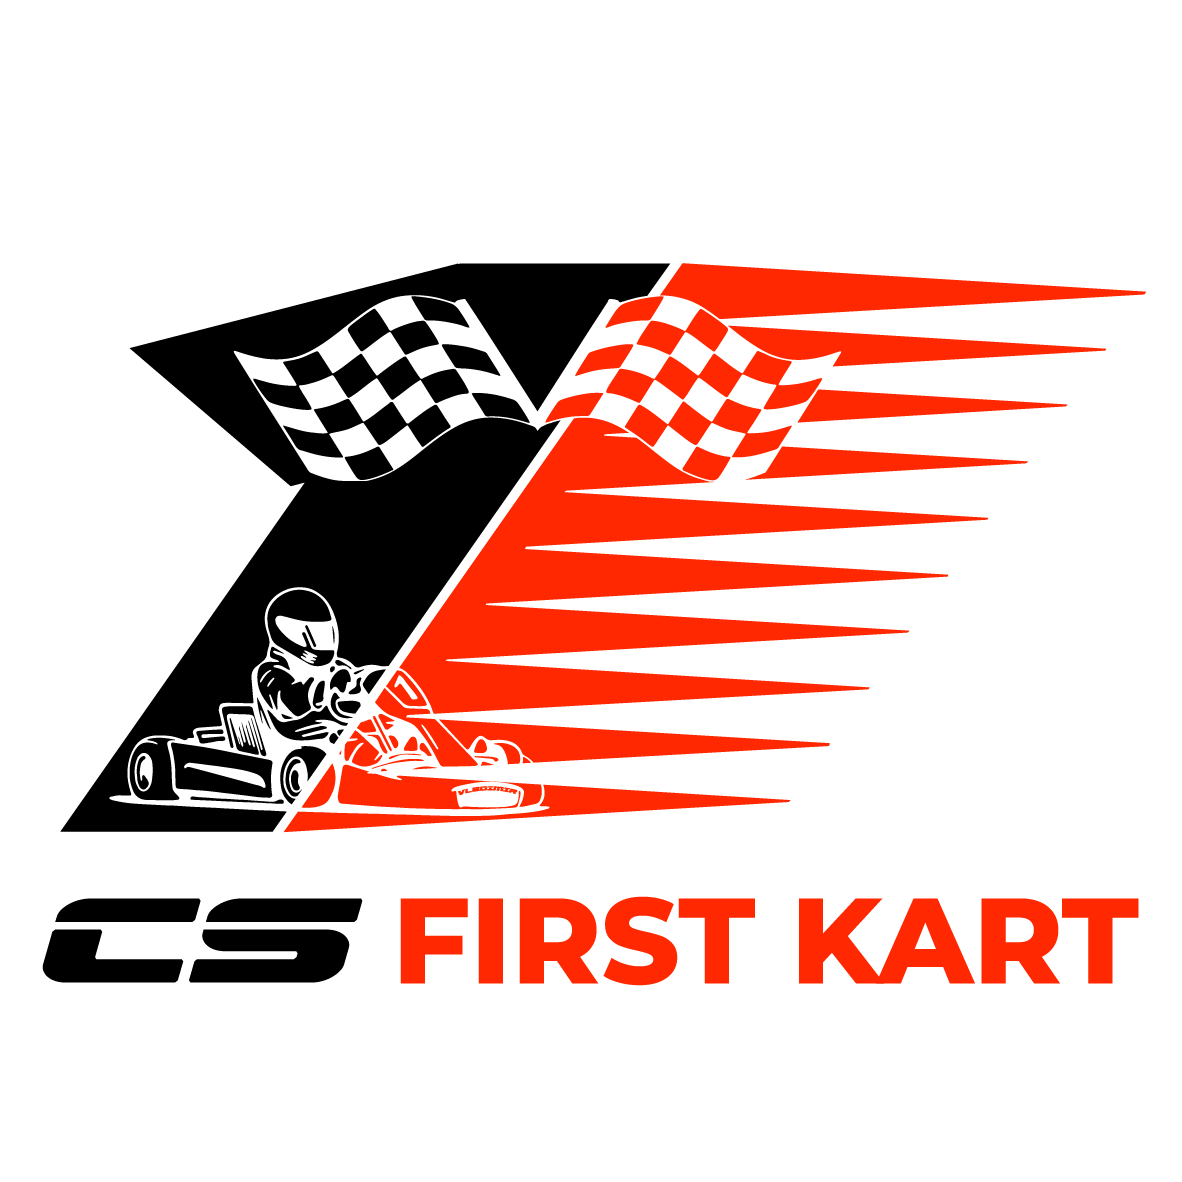 Club Sportiv First Kart - Primul Kart logo